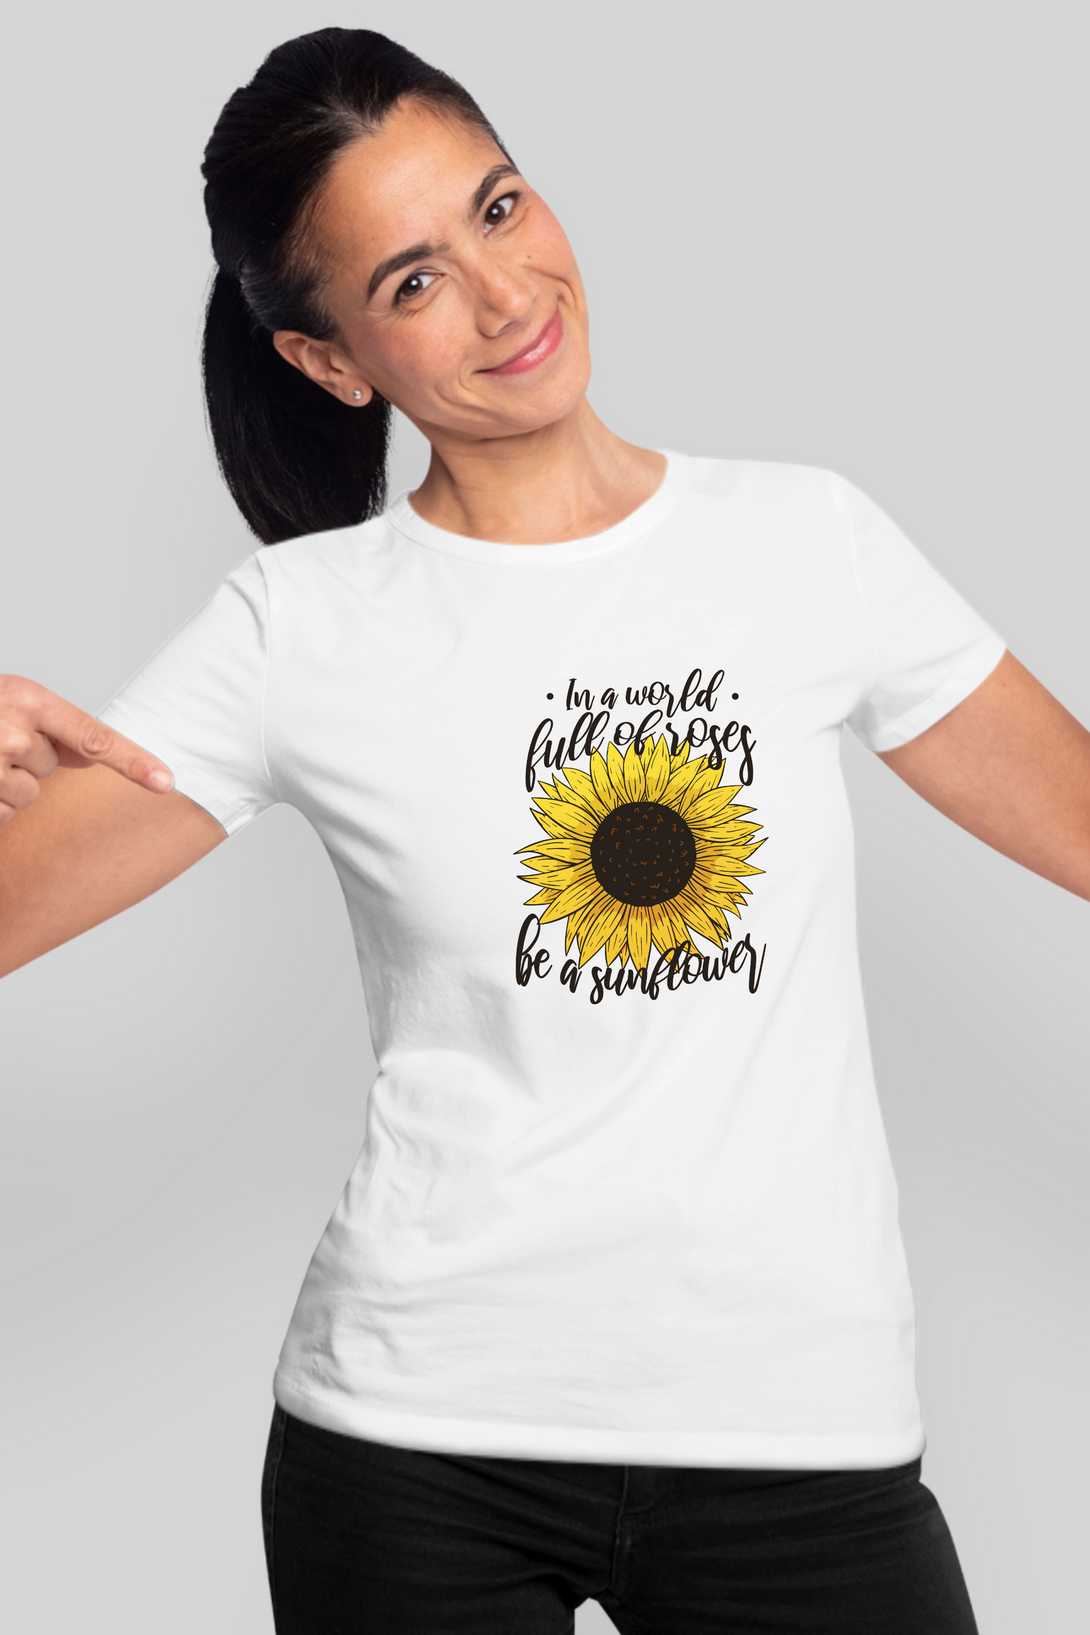 Sunflower Power Printed T-Shirt For Women - WowWaves - 8